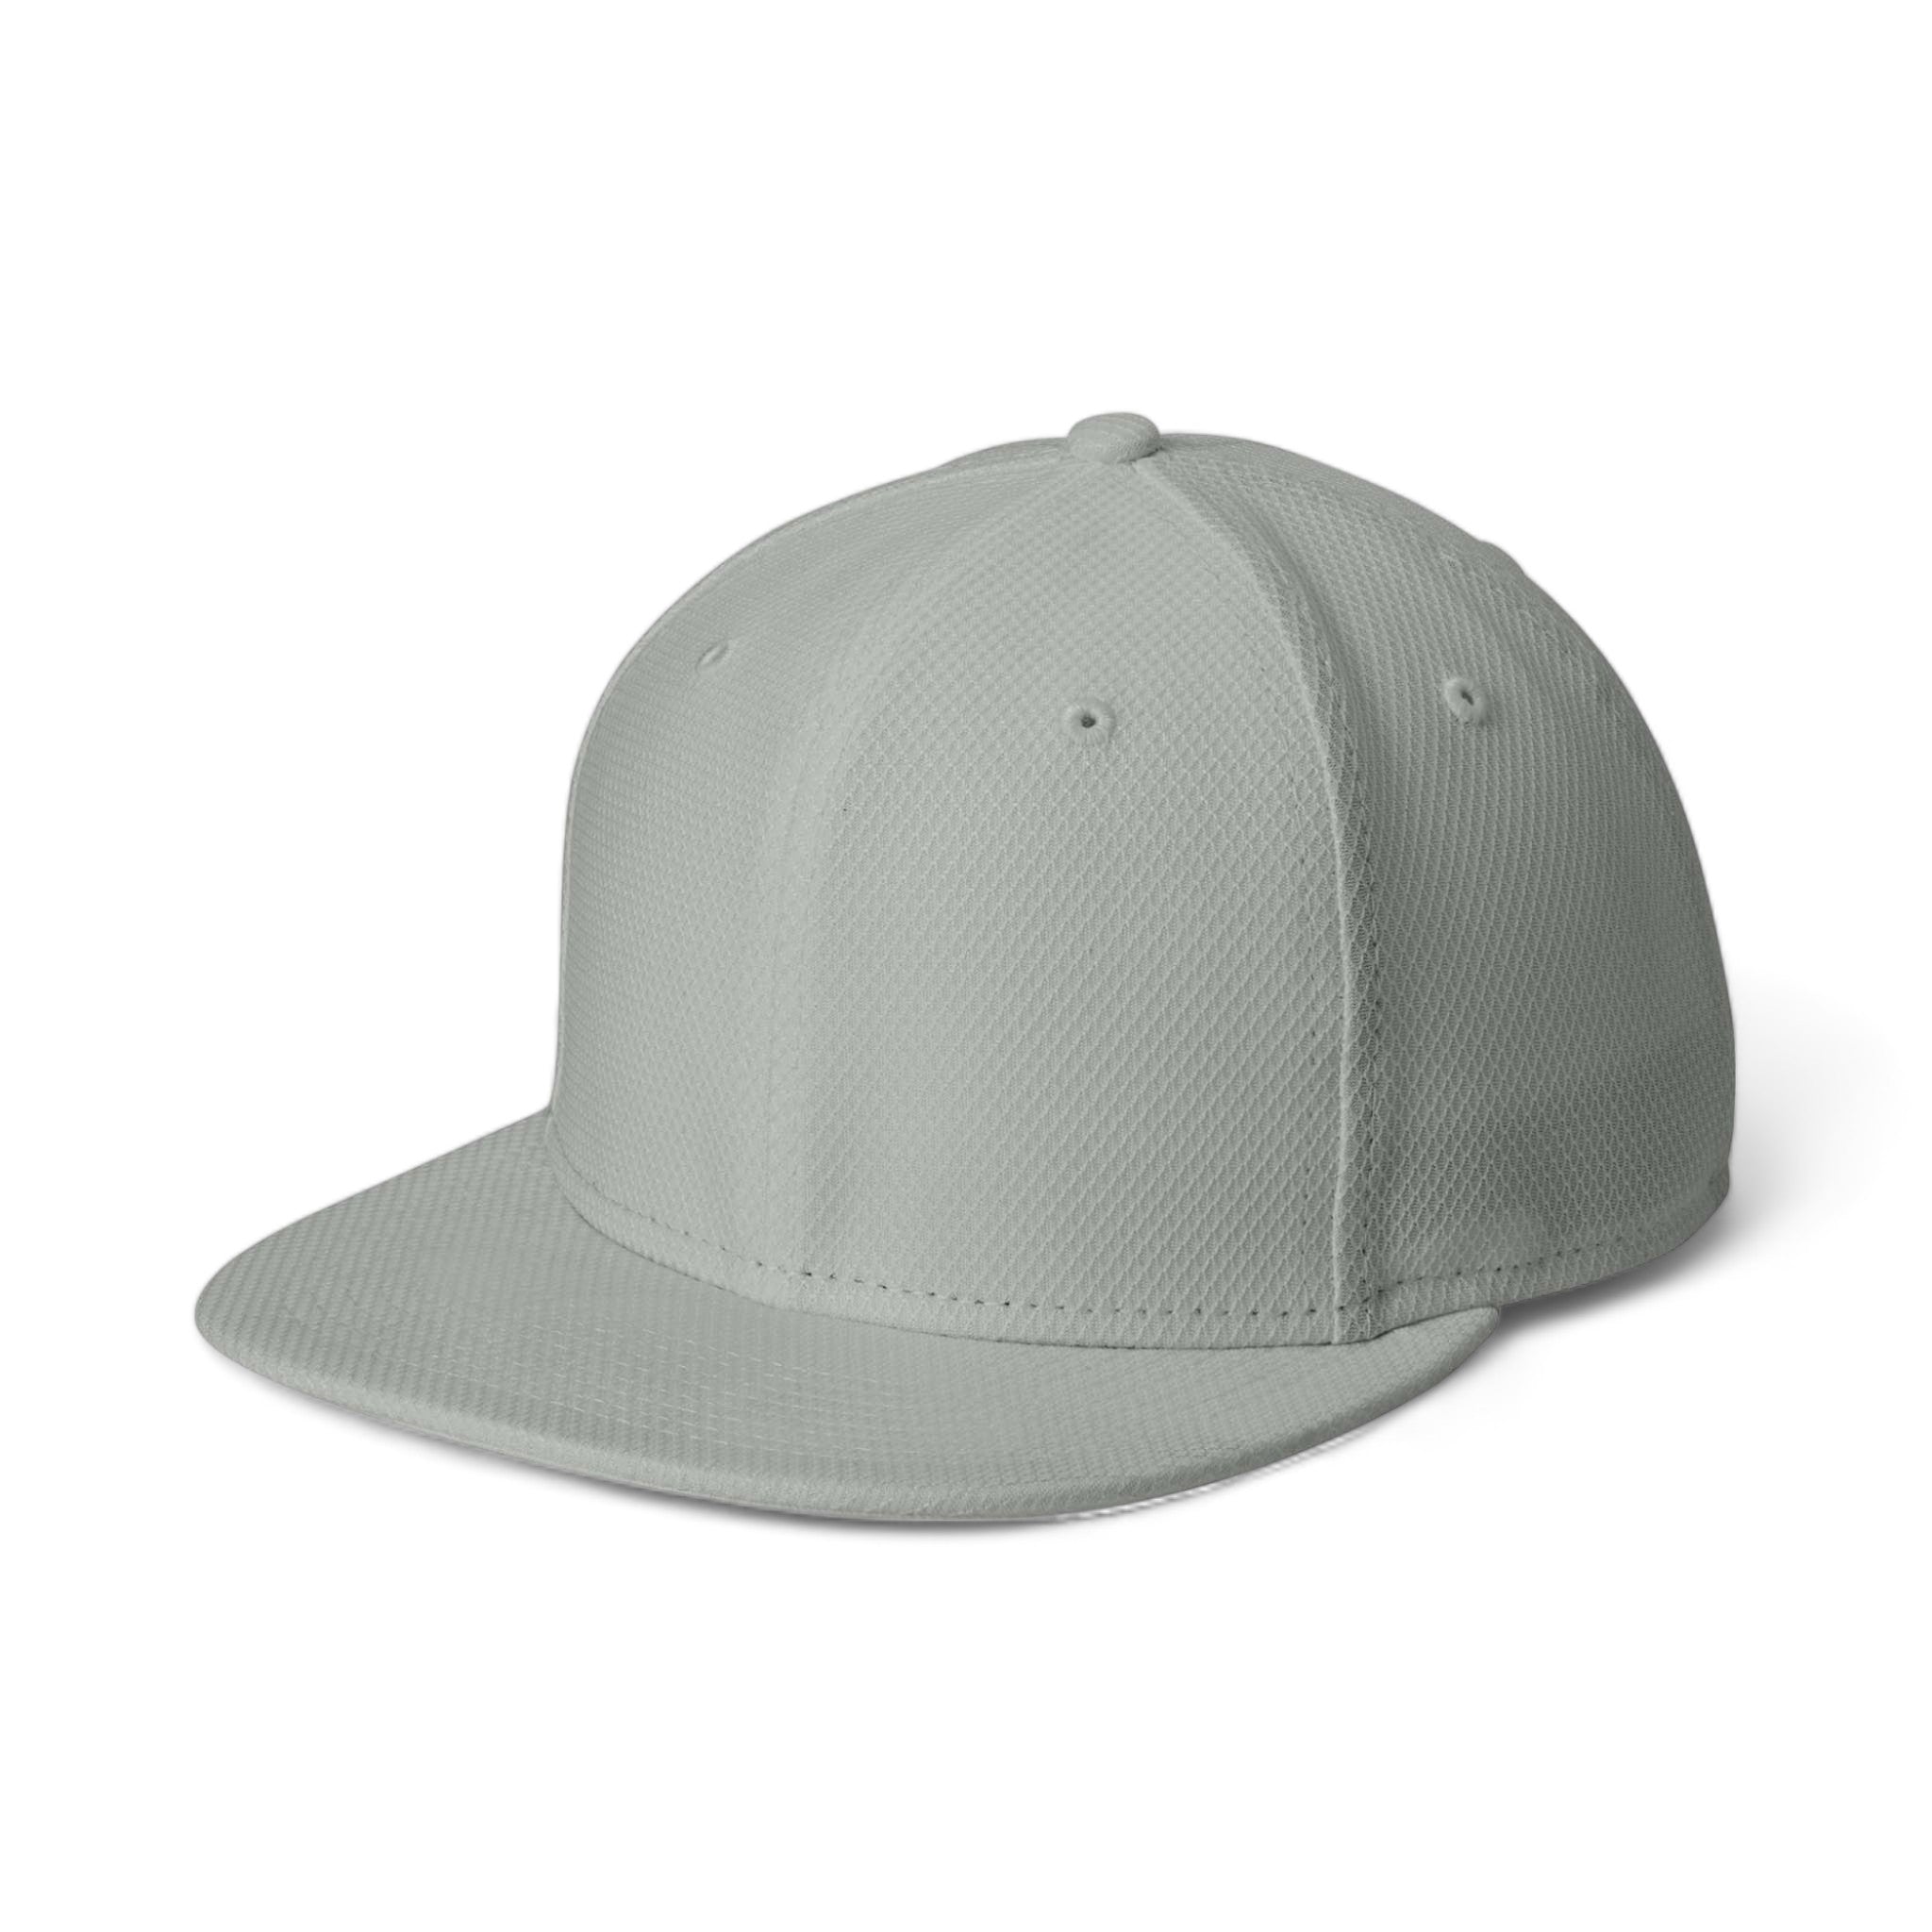 Side view of New Era NE404 custom hat in grey